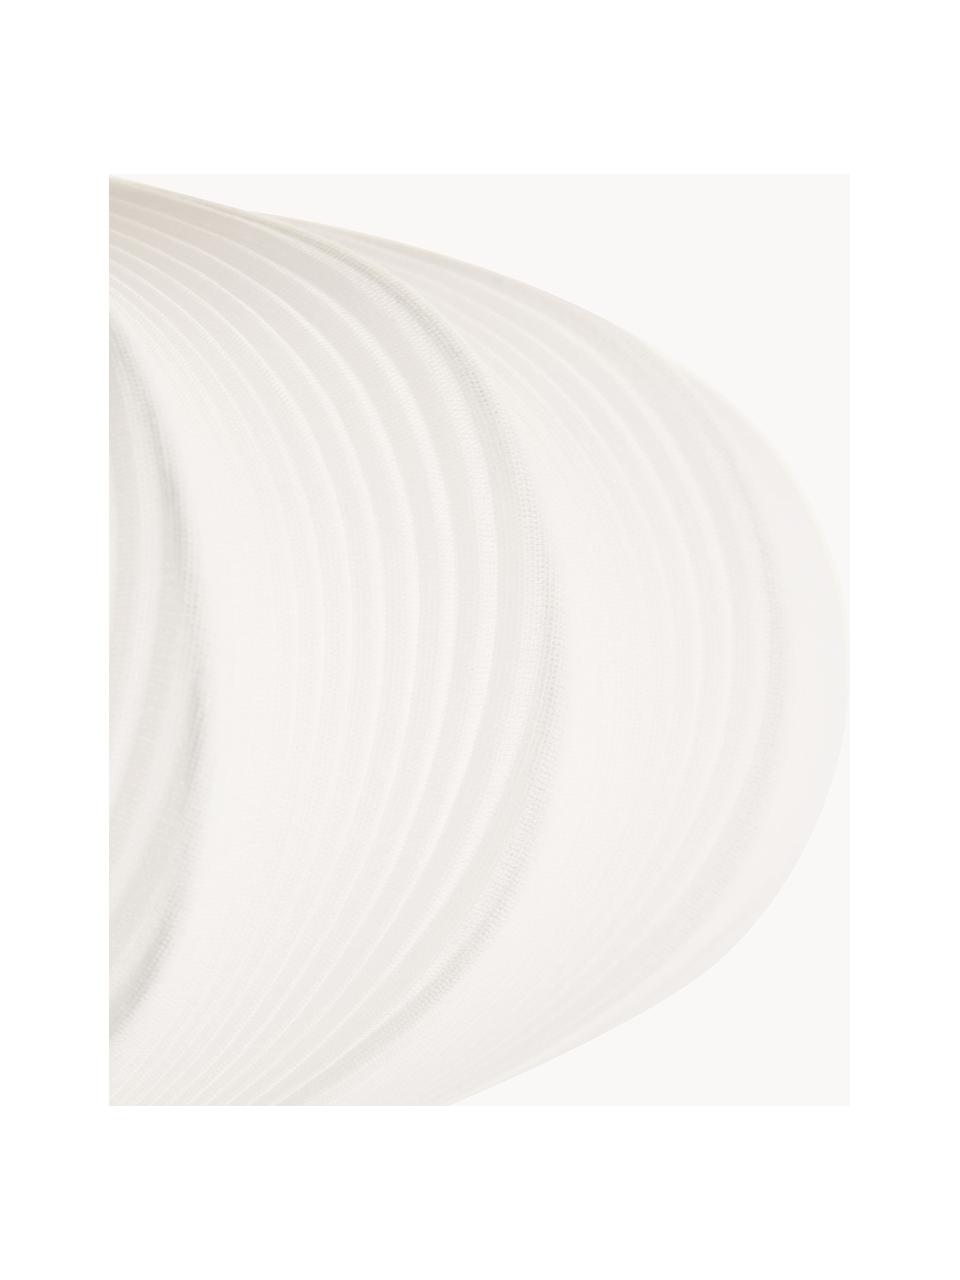 Plafonnier textile Mamsell, Blanc, Ø 55 x haut. 28 cm